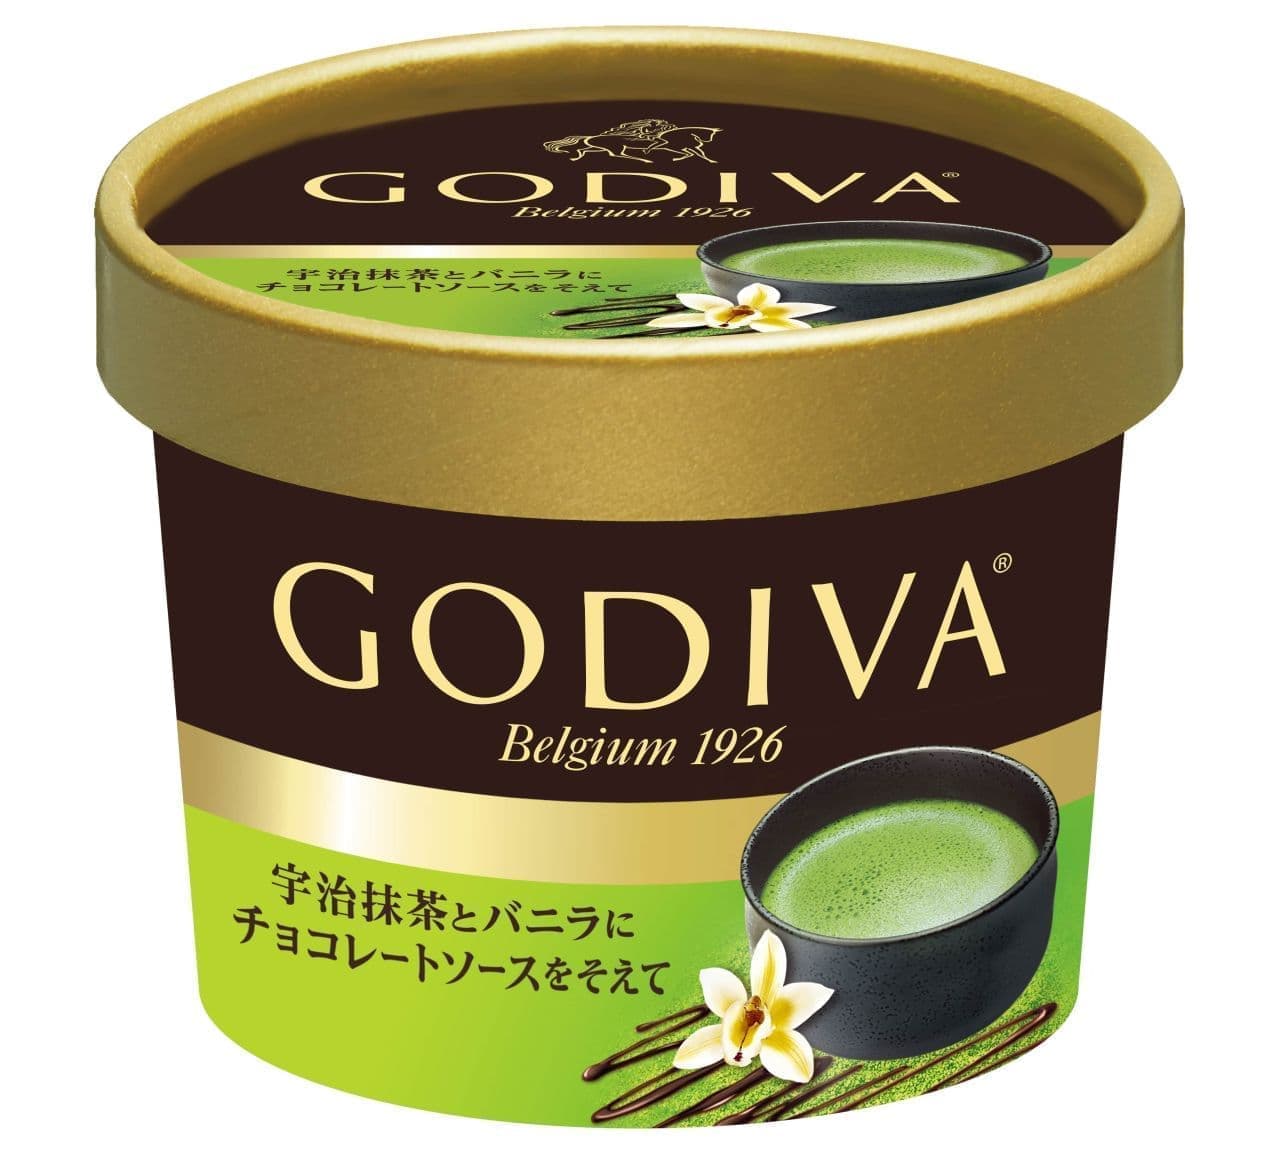 Godiva Cup Ice "Uji Matcha and Vanilla with Chocolate Sauce"